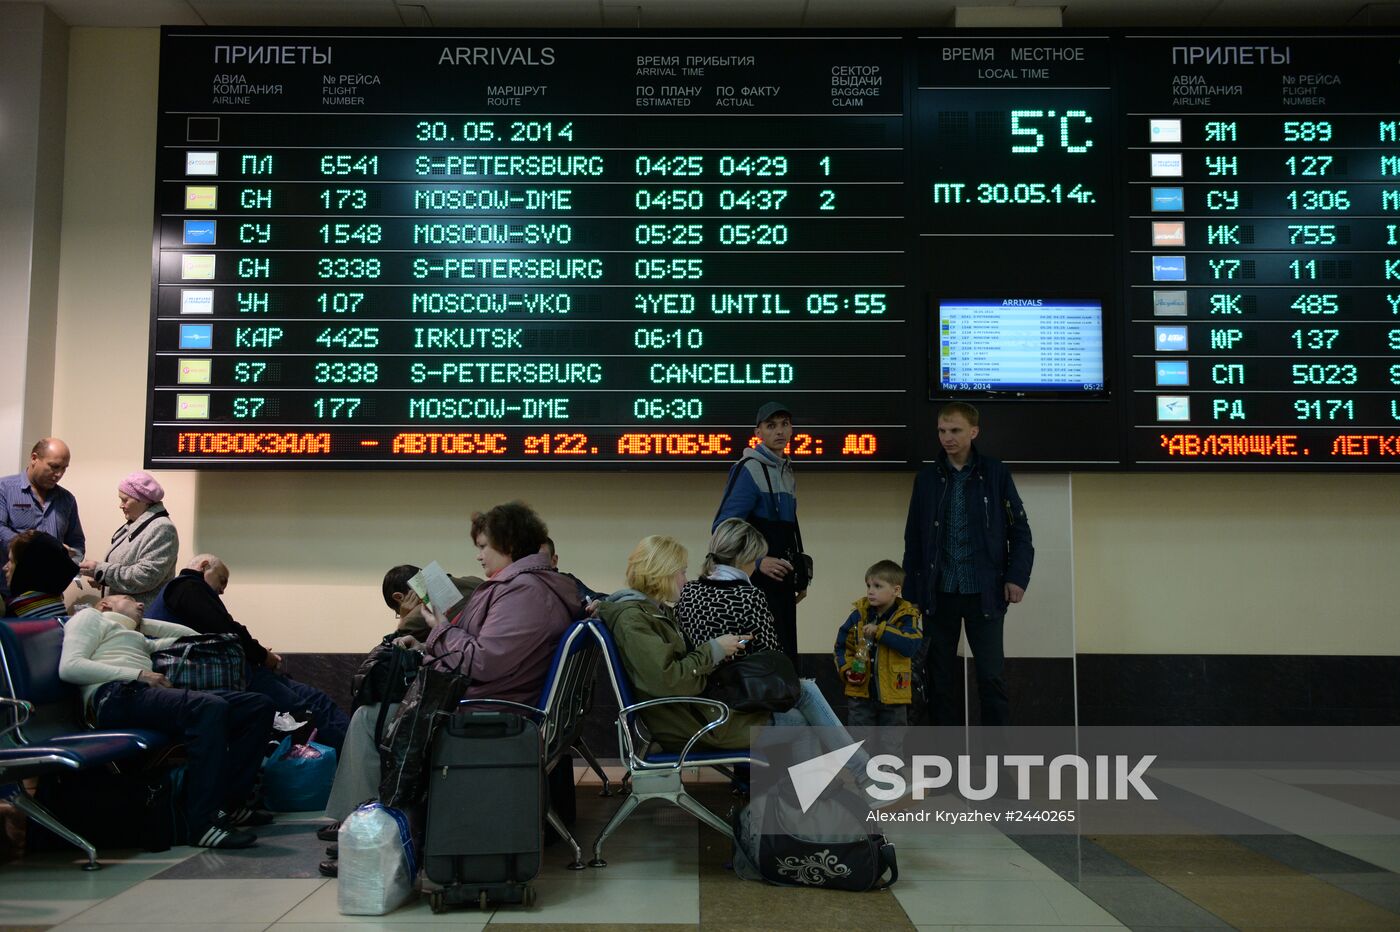 Tolmachyovo Airport in Novosibirsk